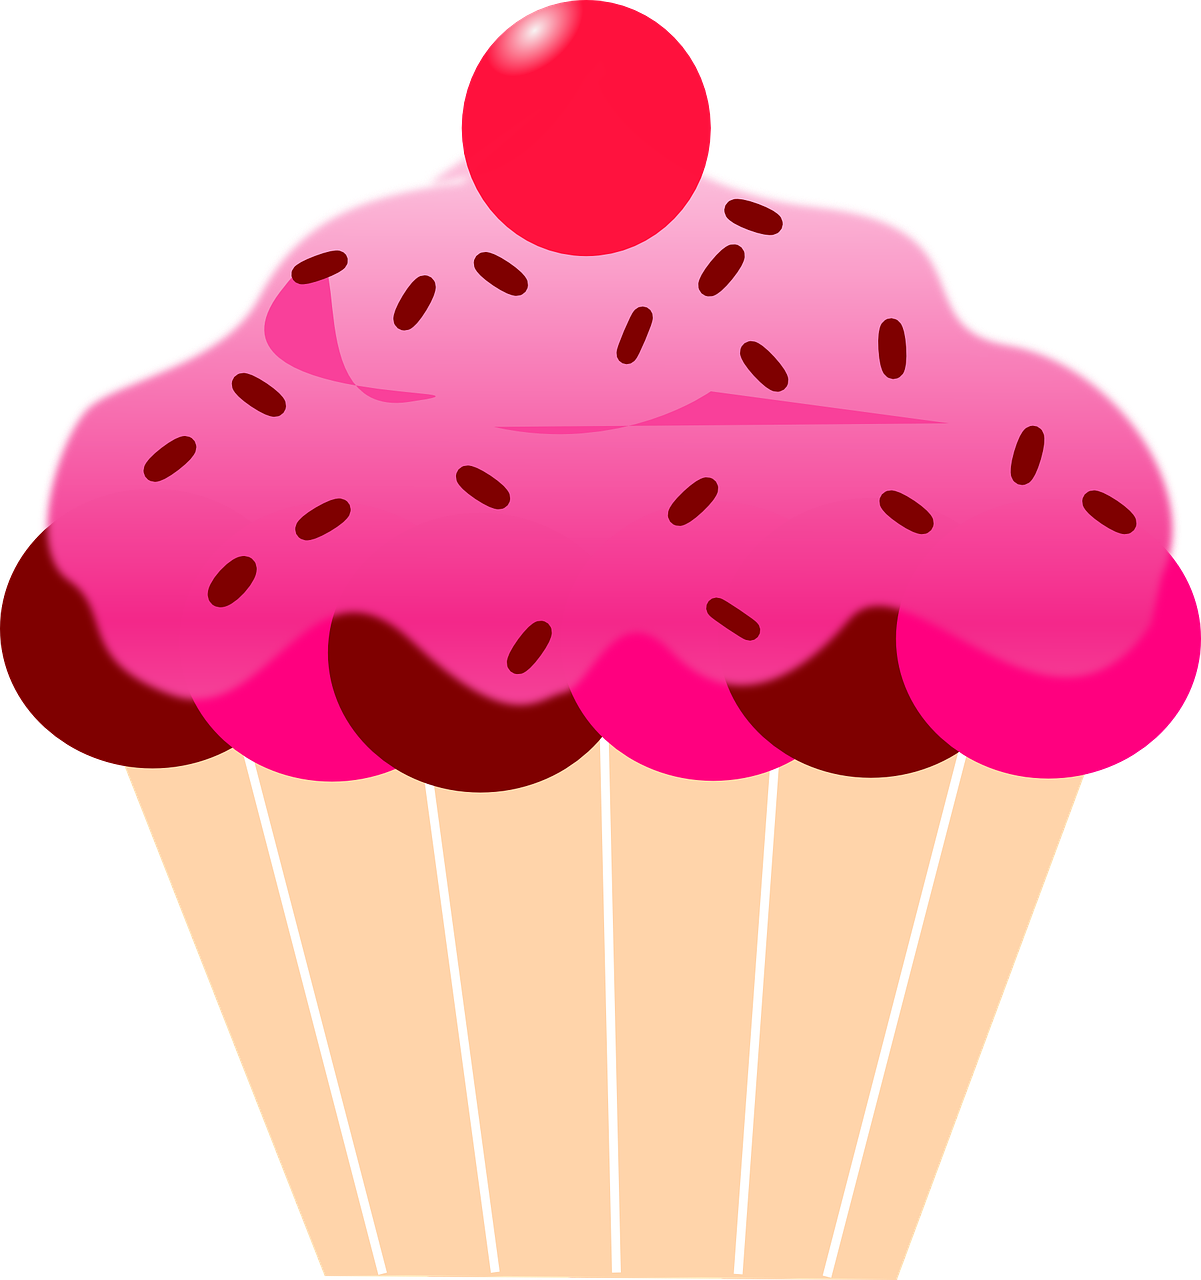 cupcake cherry pink icing free photo